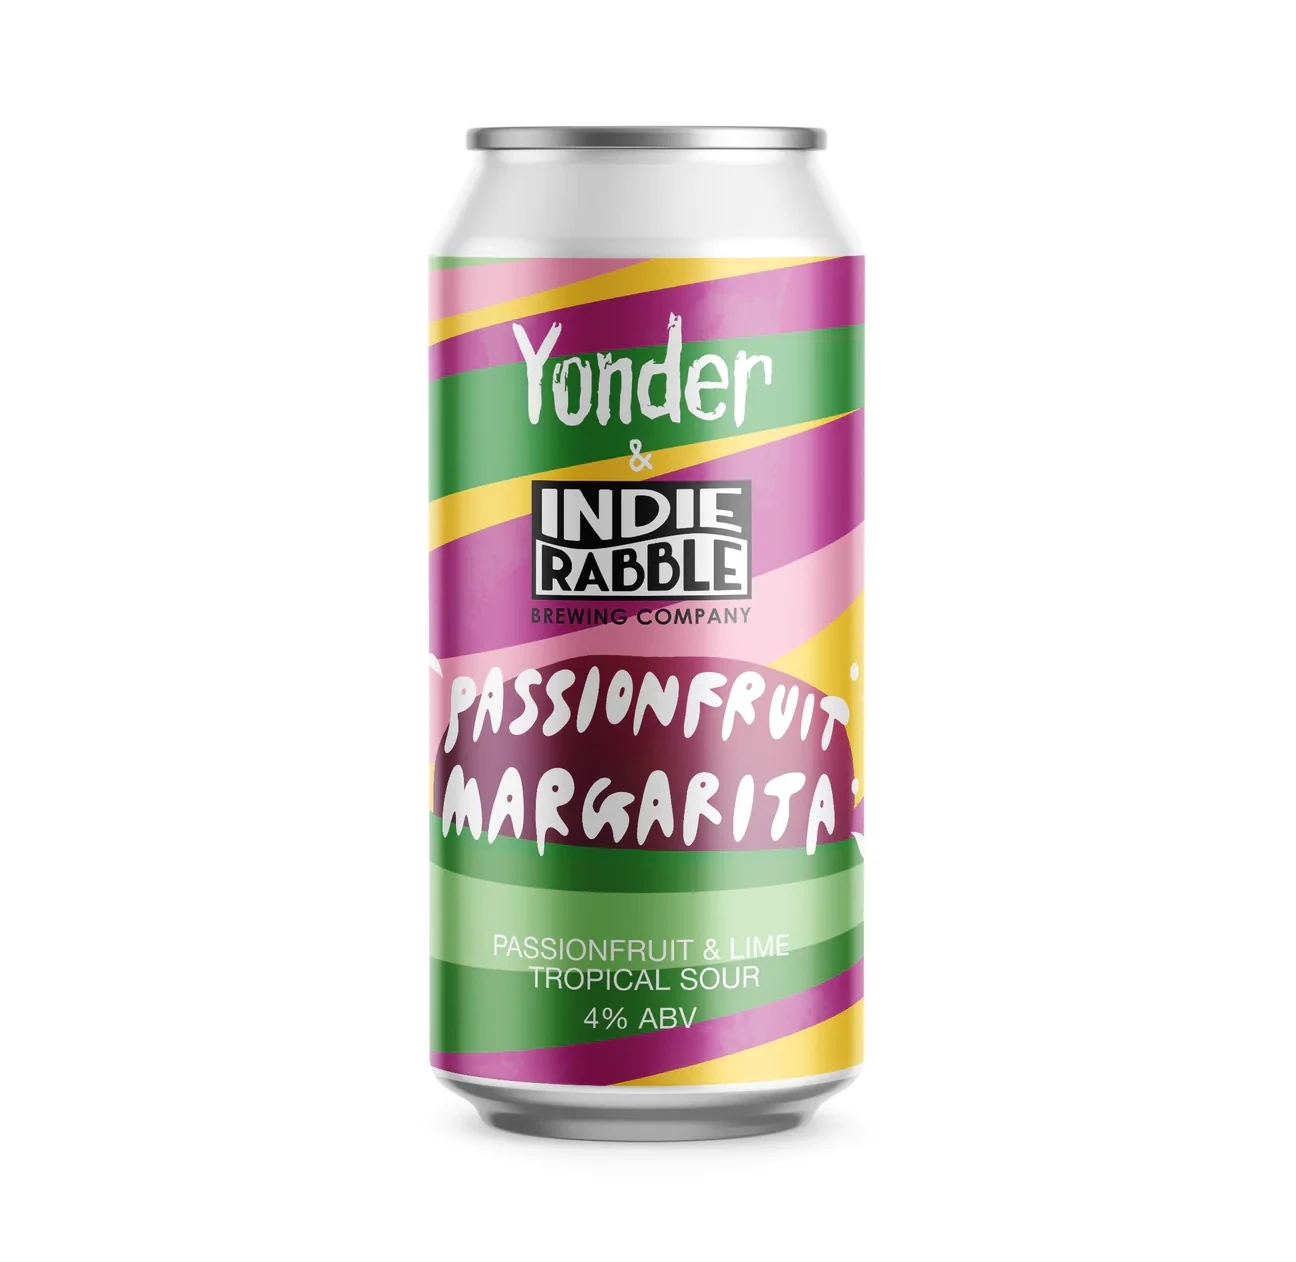 Yonder x Indie Rabble Passionfruit Margarita Sour